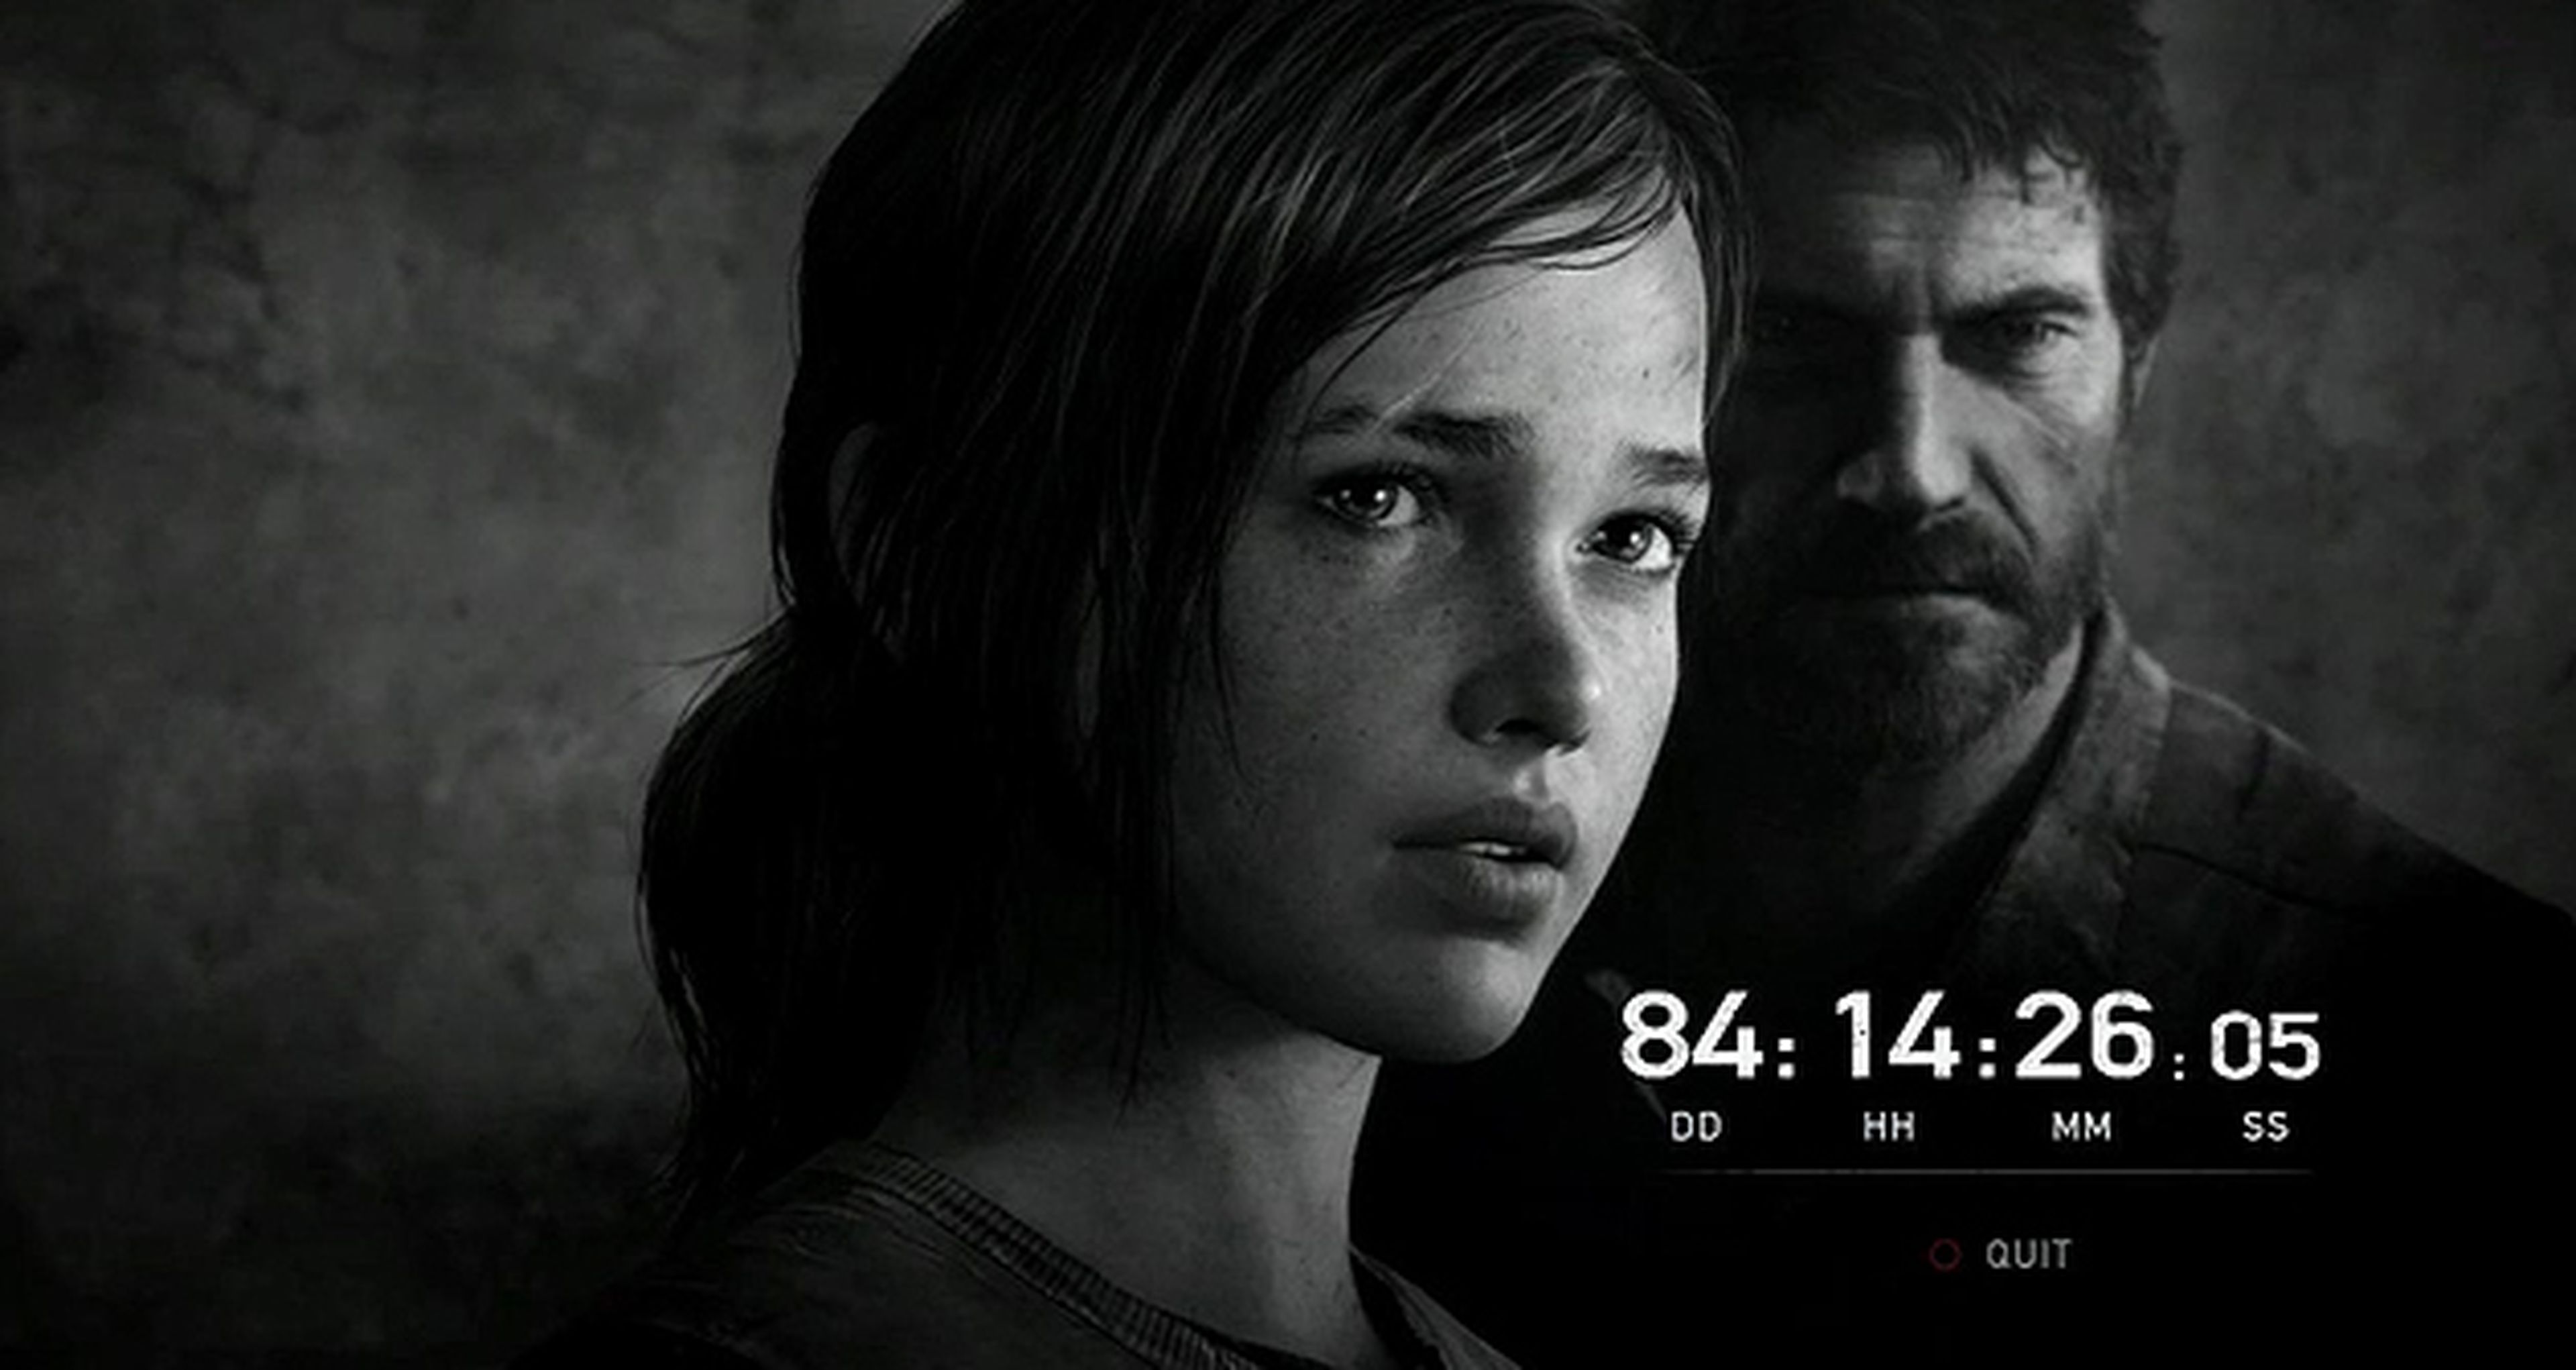 La demo de The Last of Us se retrasa